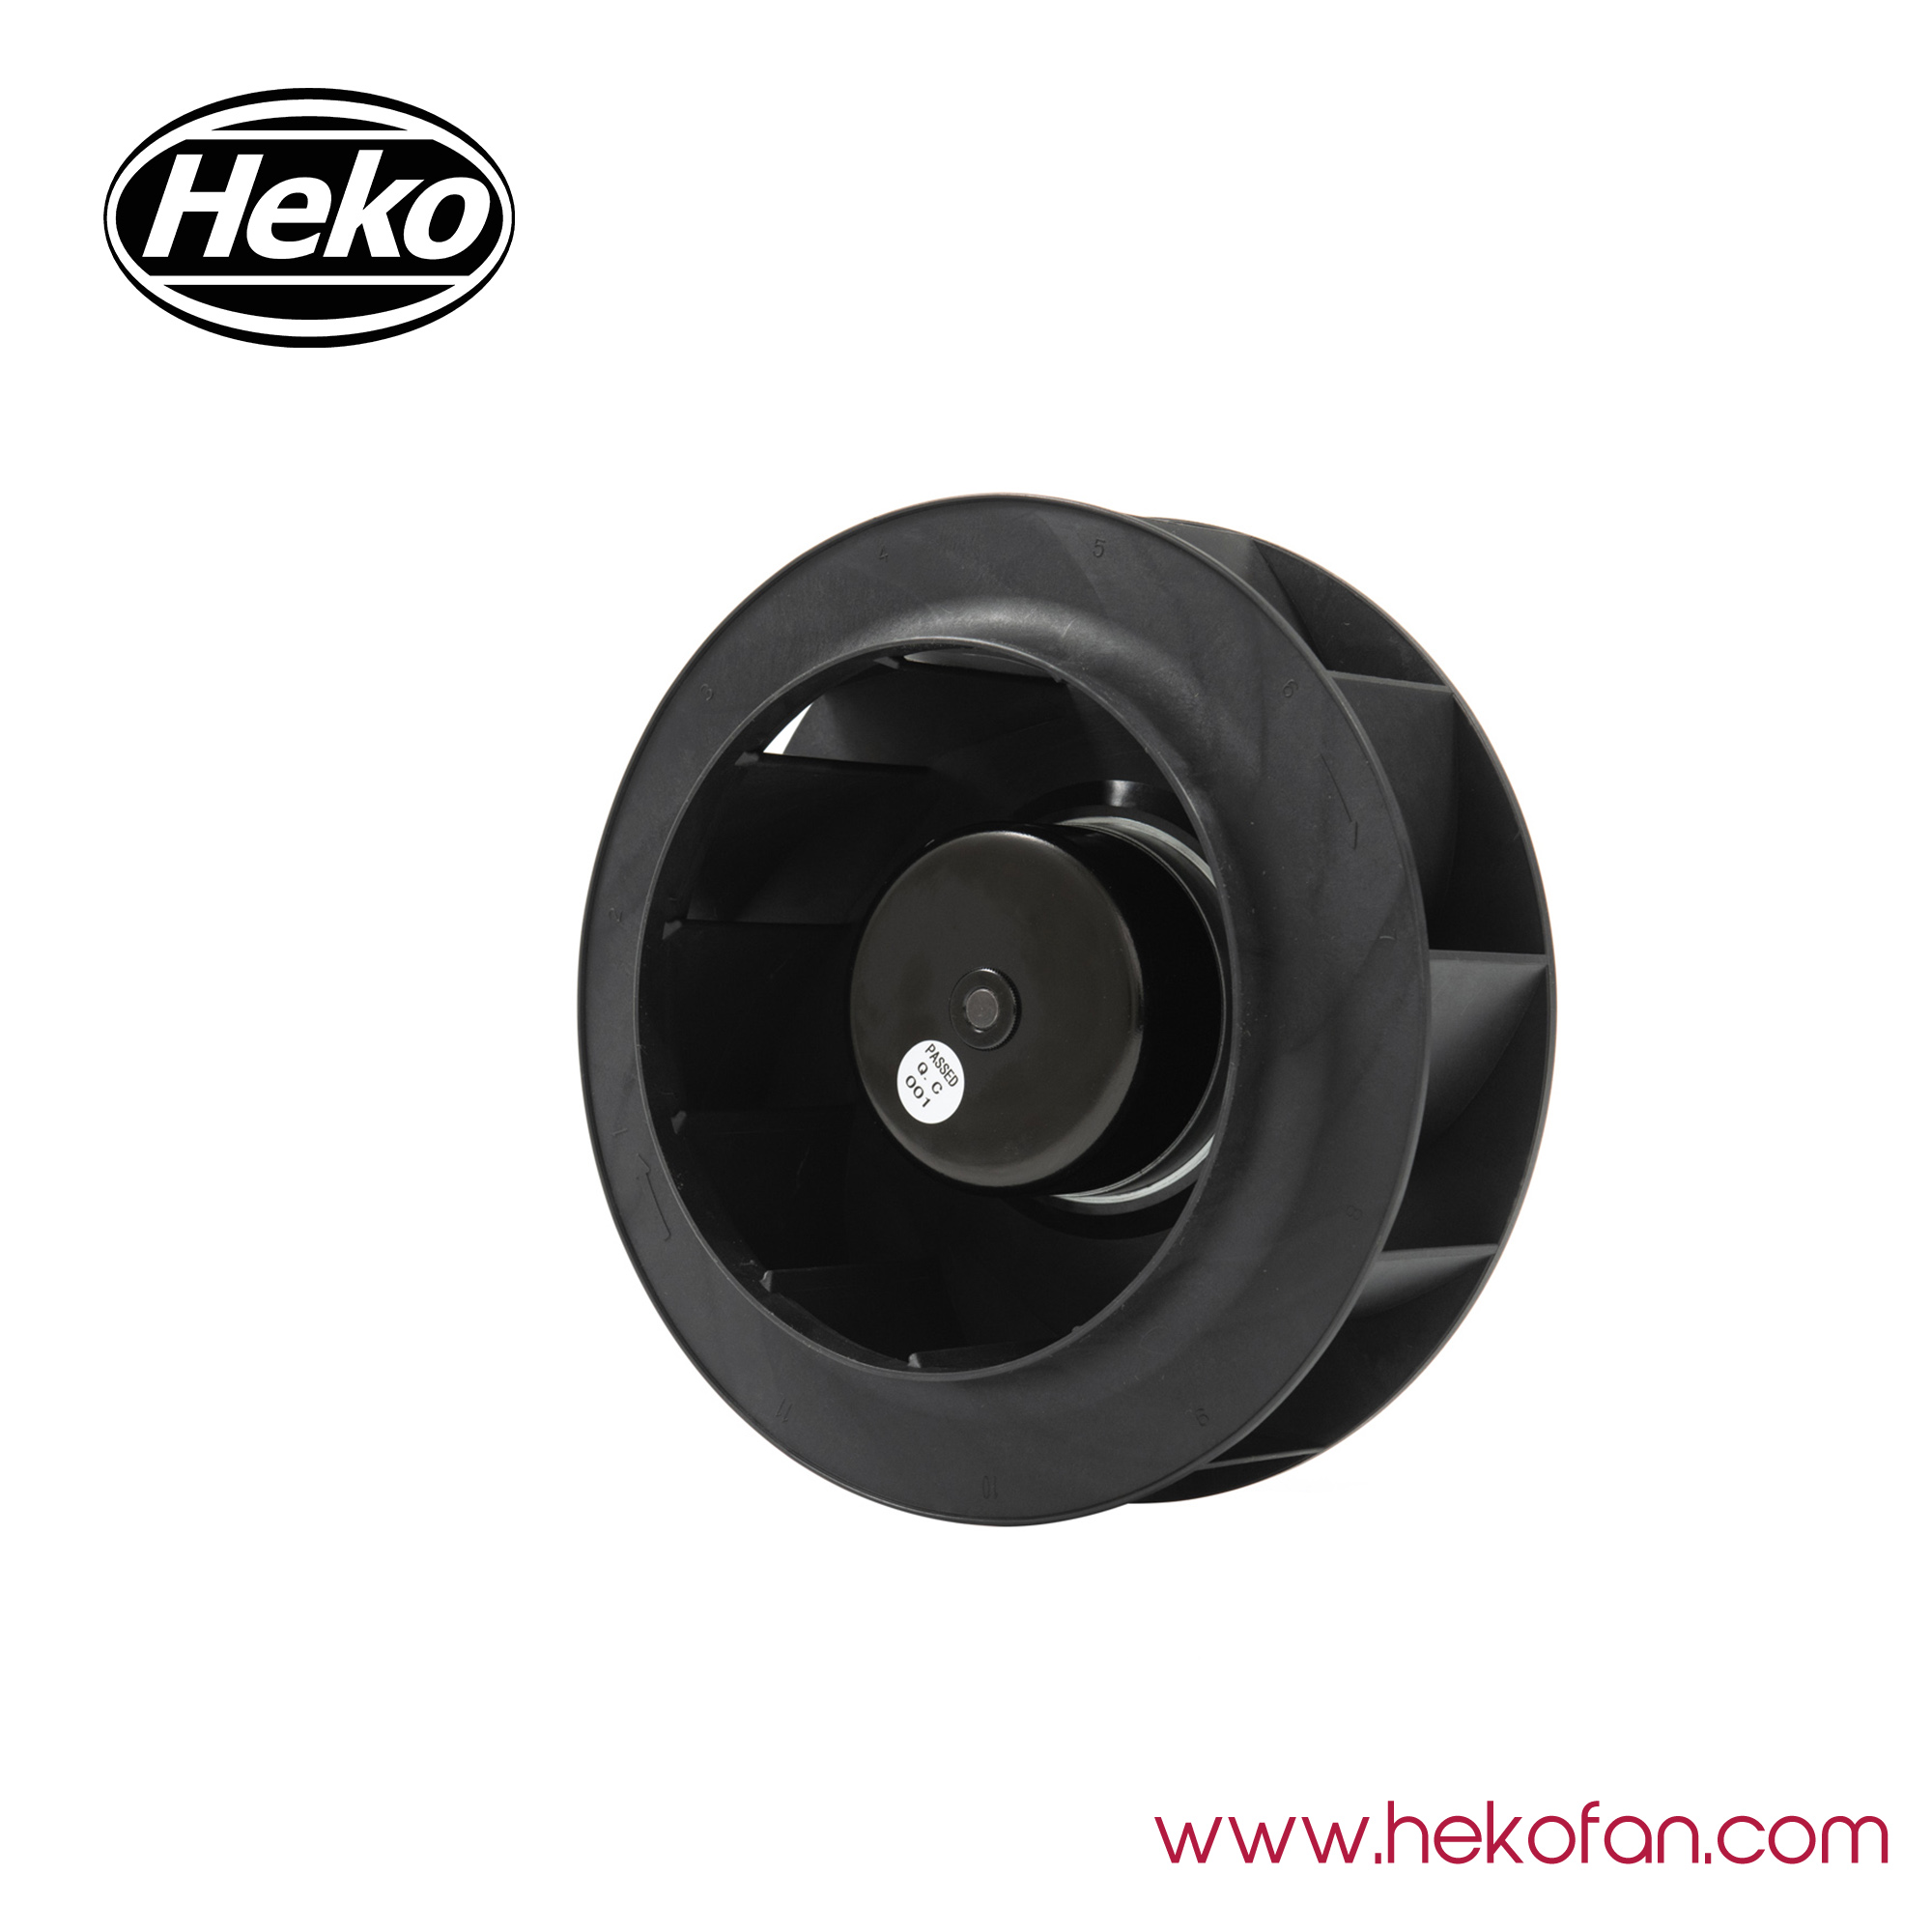 HEKO DC190mm Industrial Centrifugal Fan